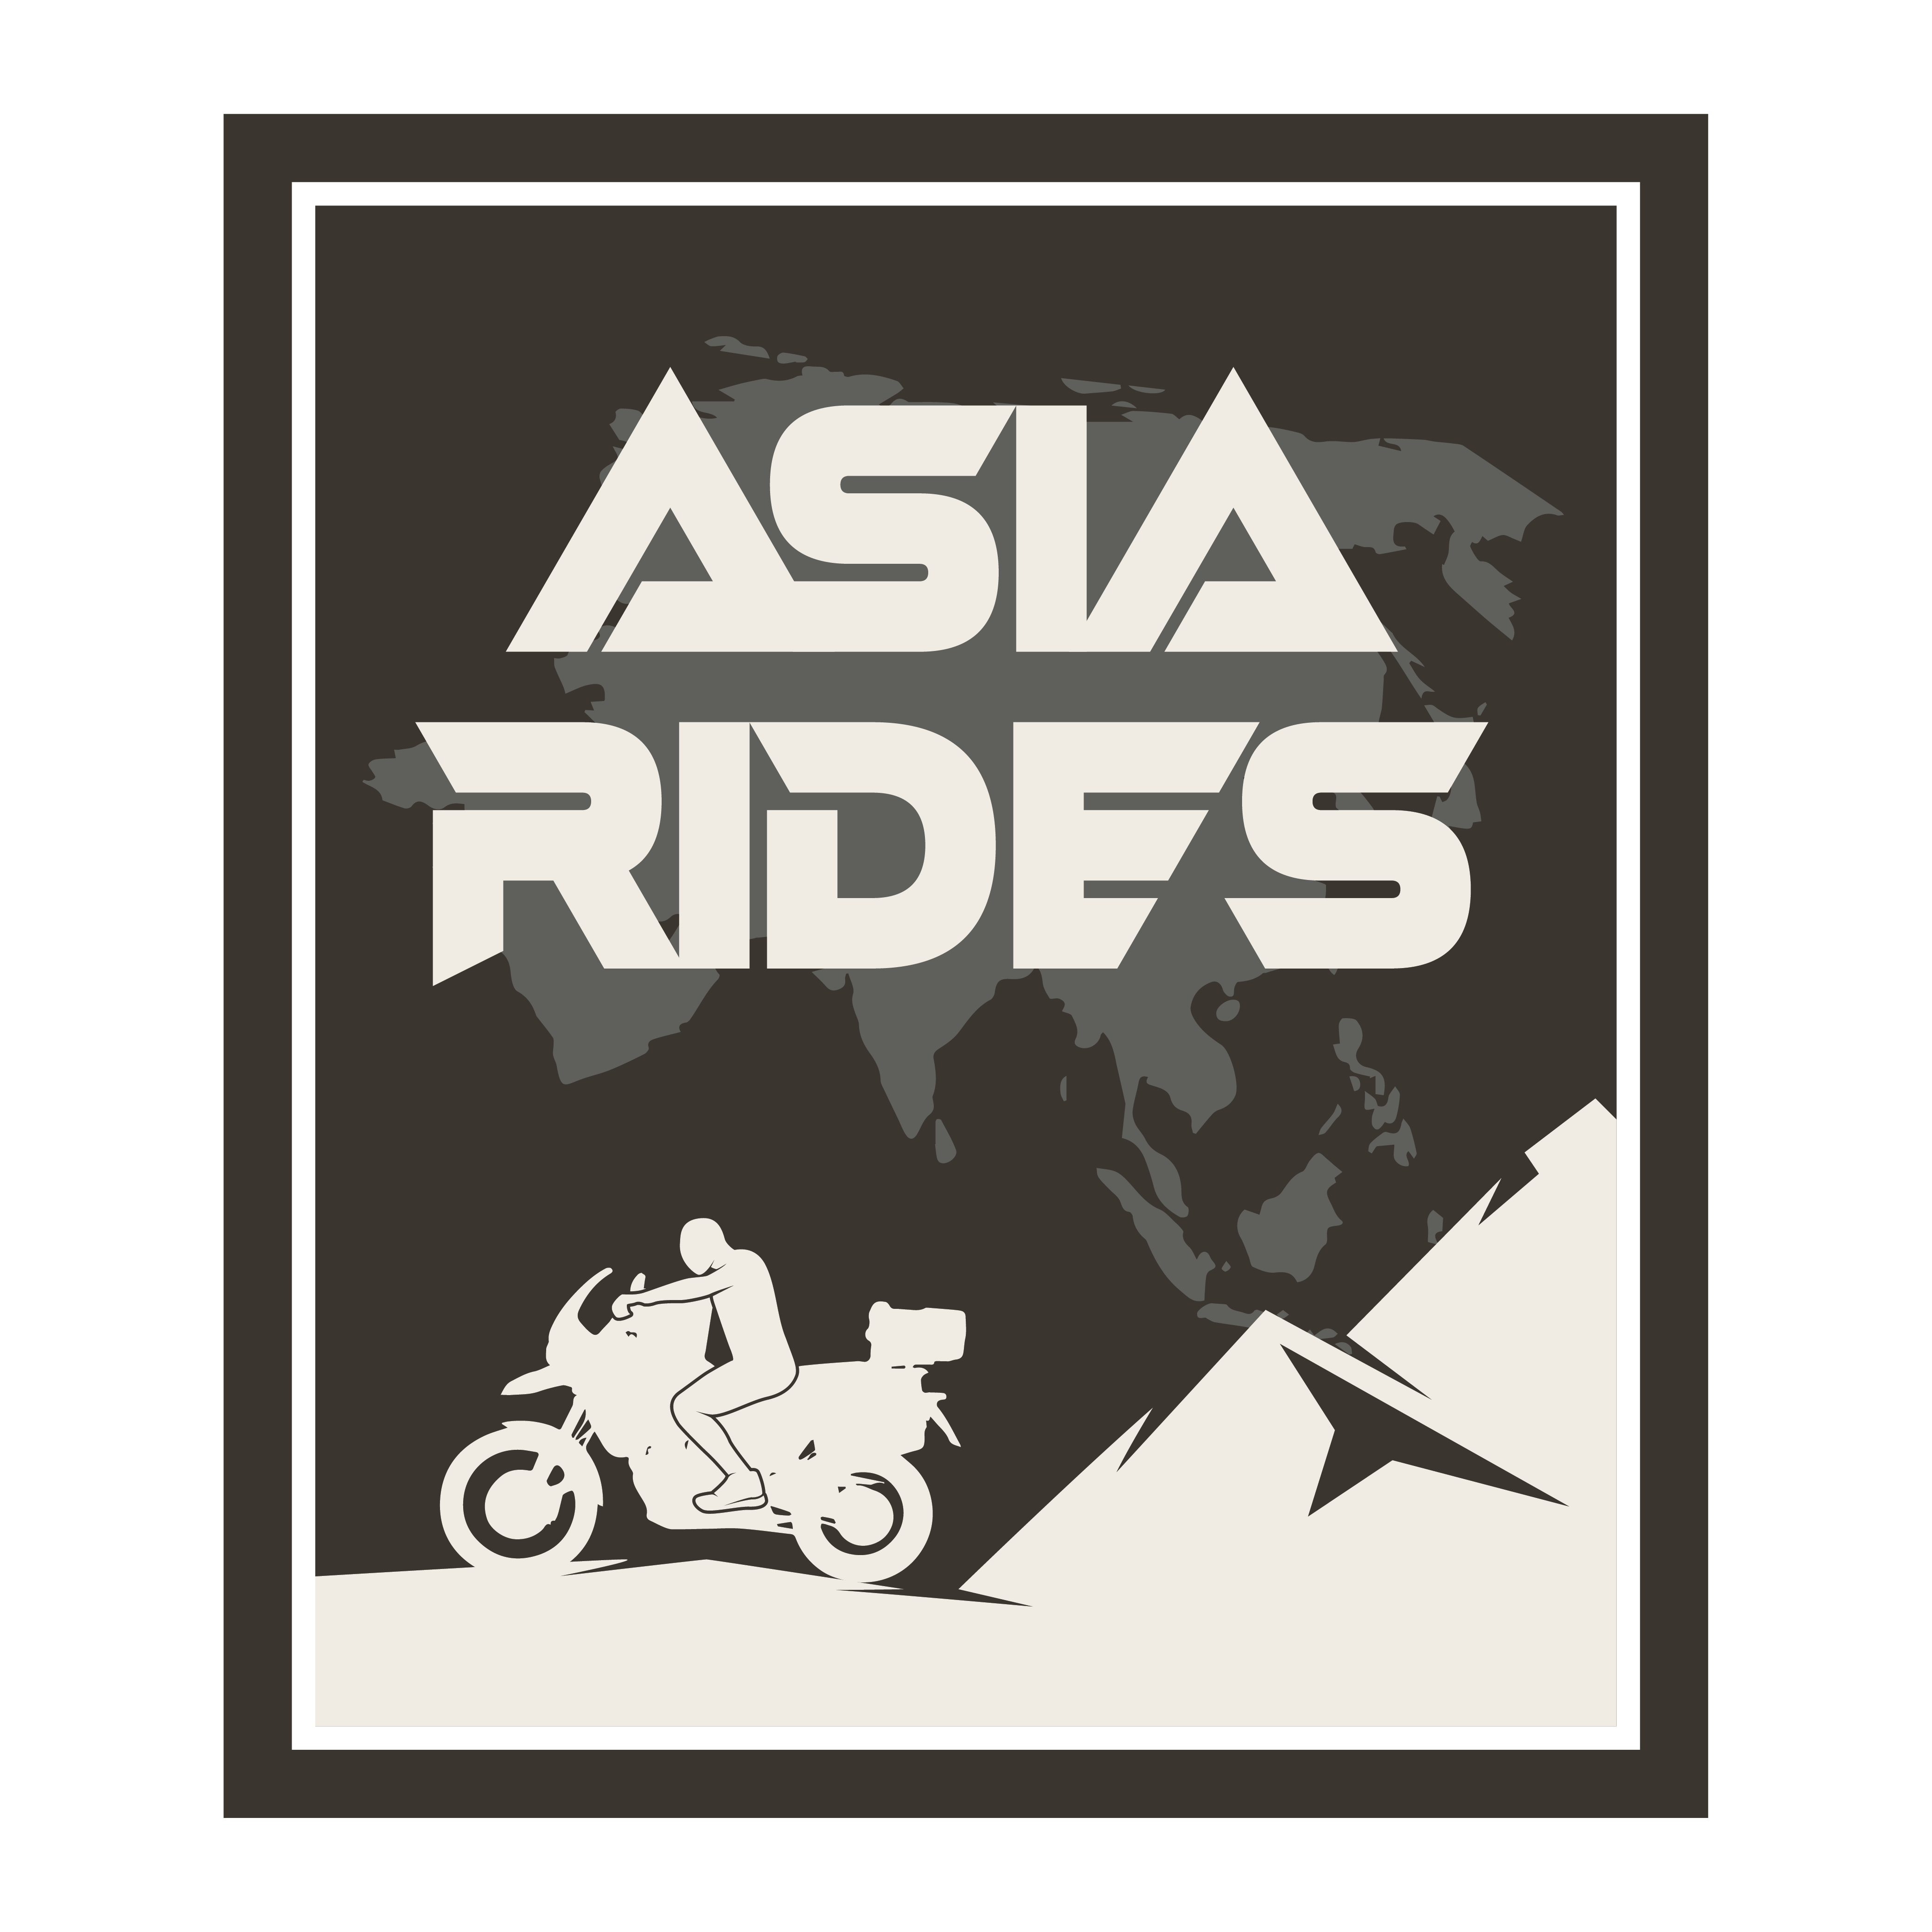 Asia Rides